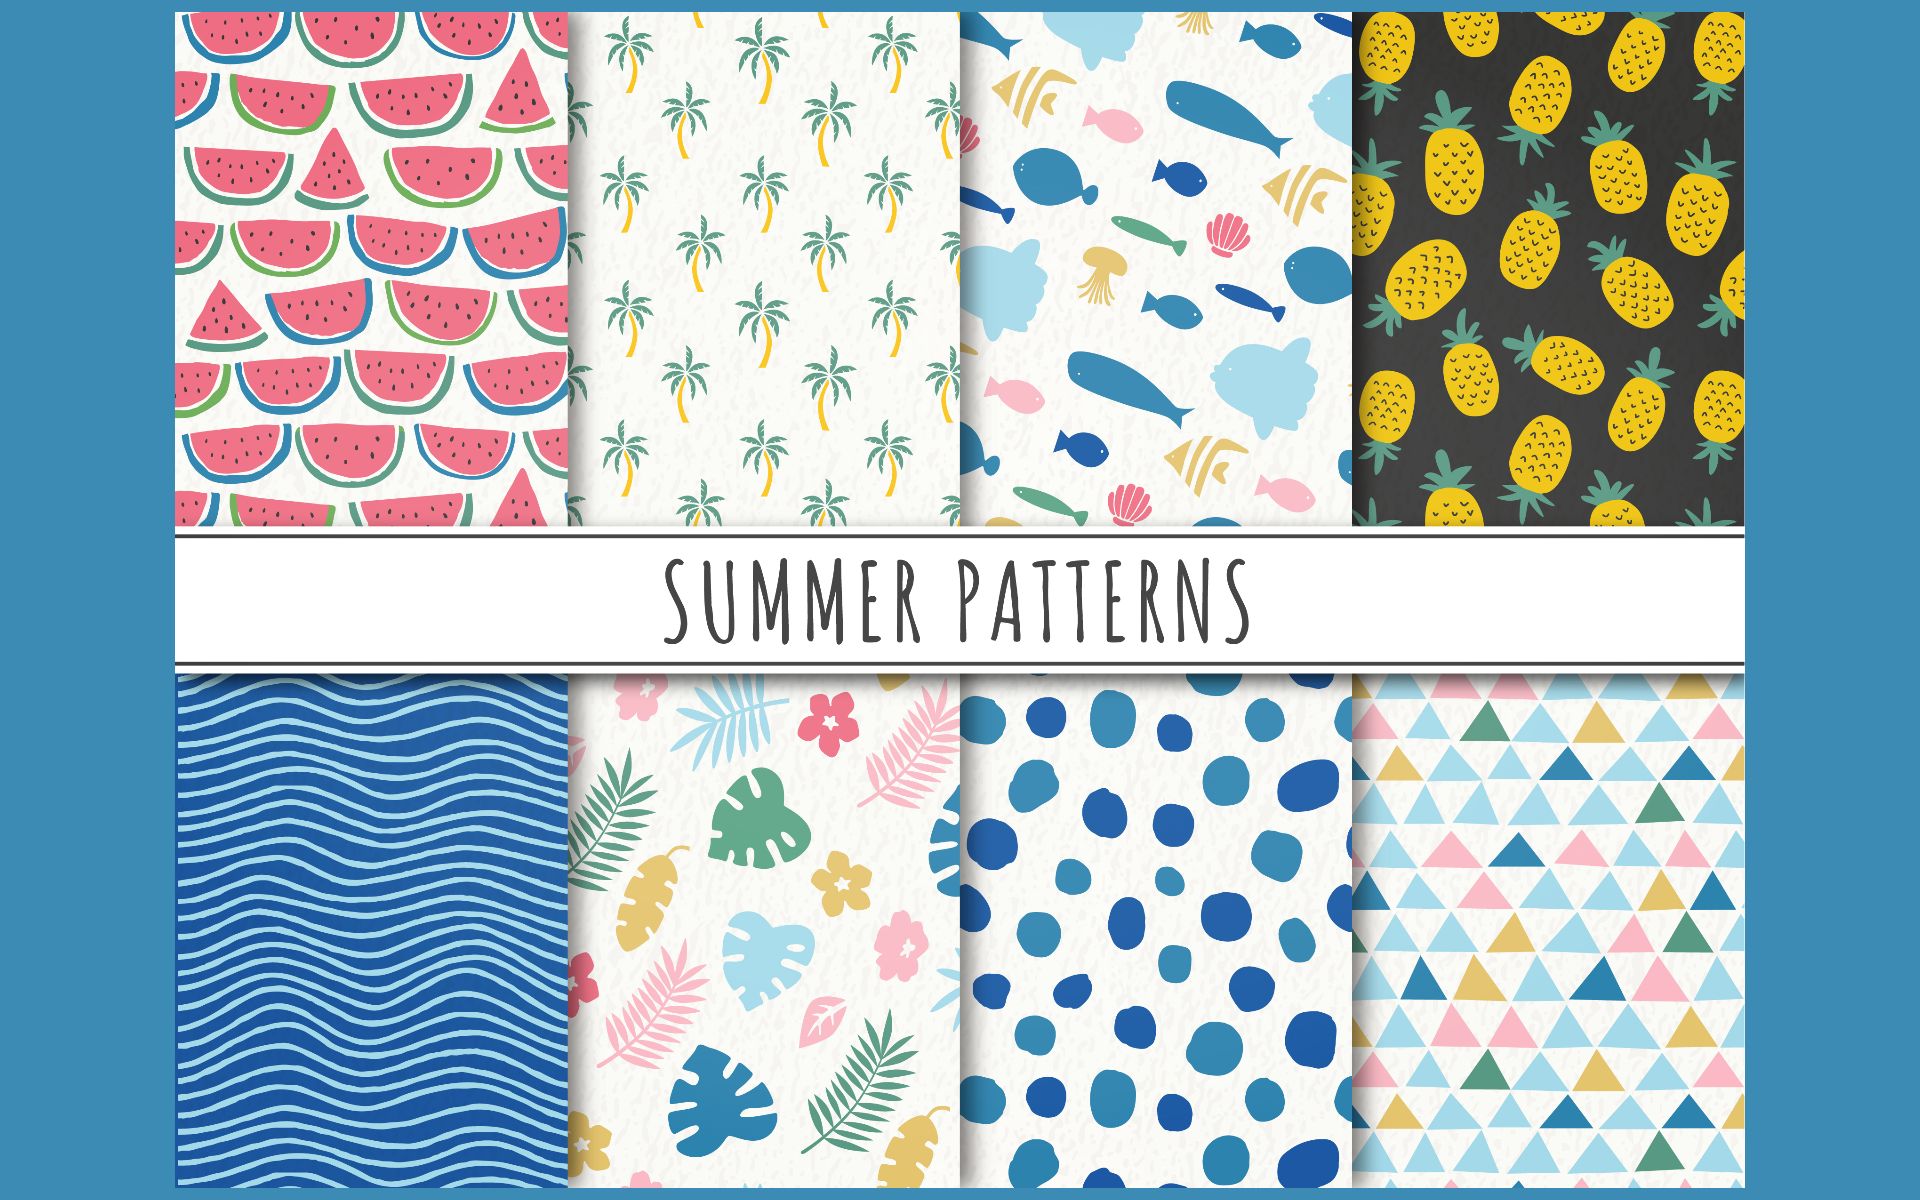 10+ Free Seamless Summer Patterns for an Eye-catching Design